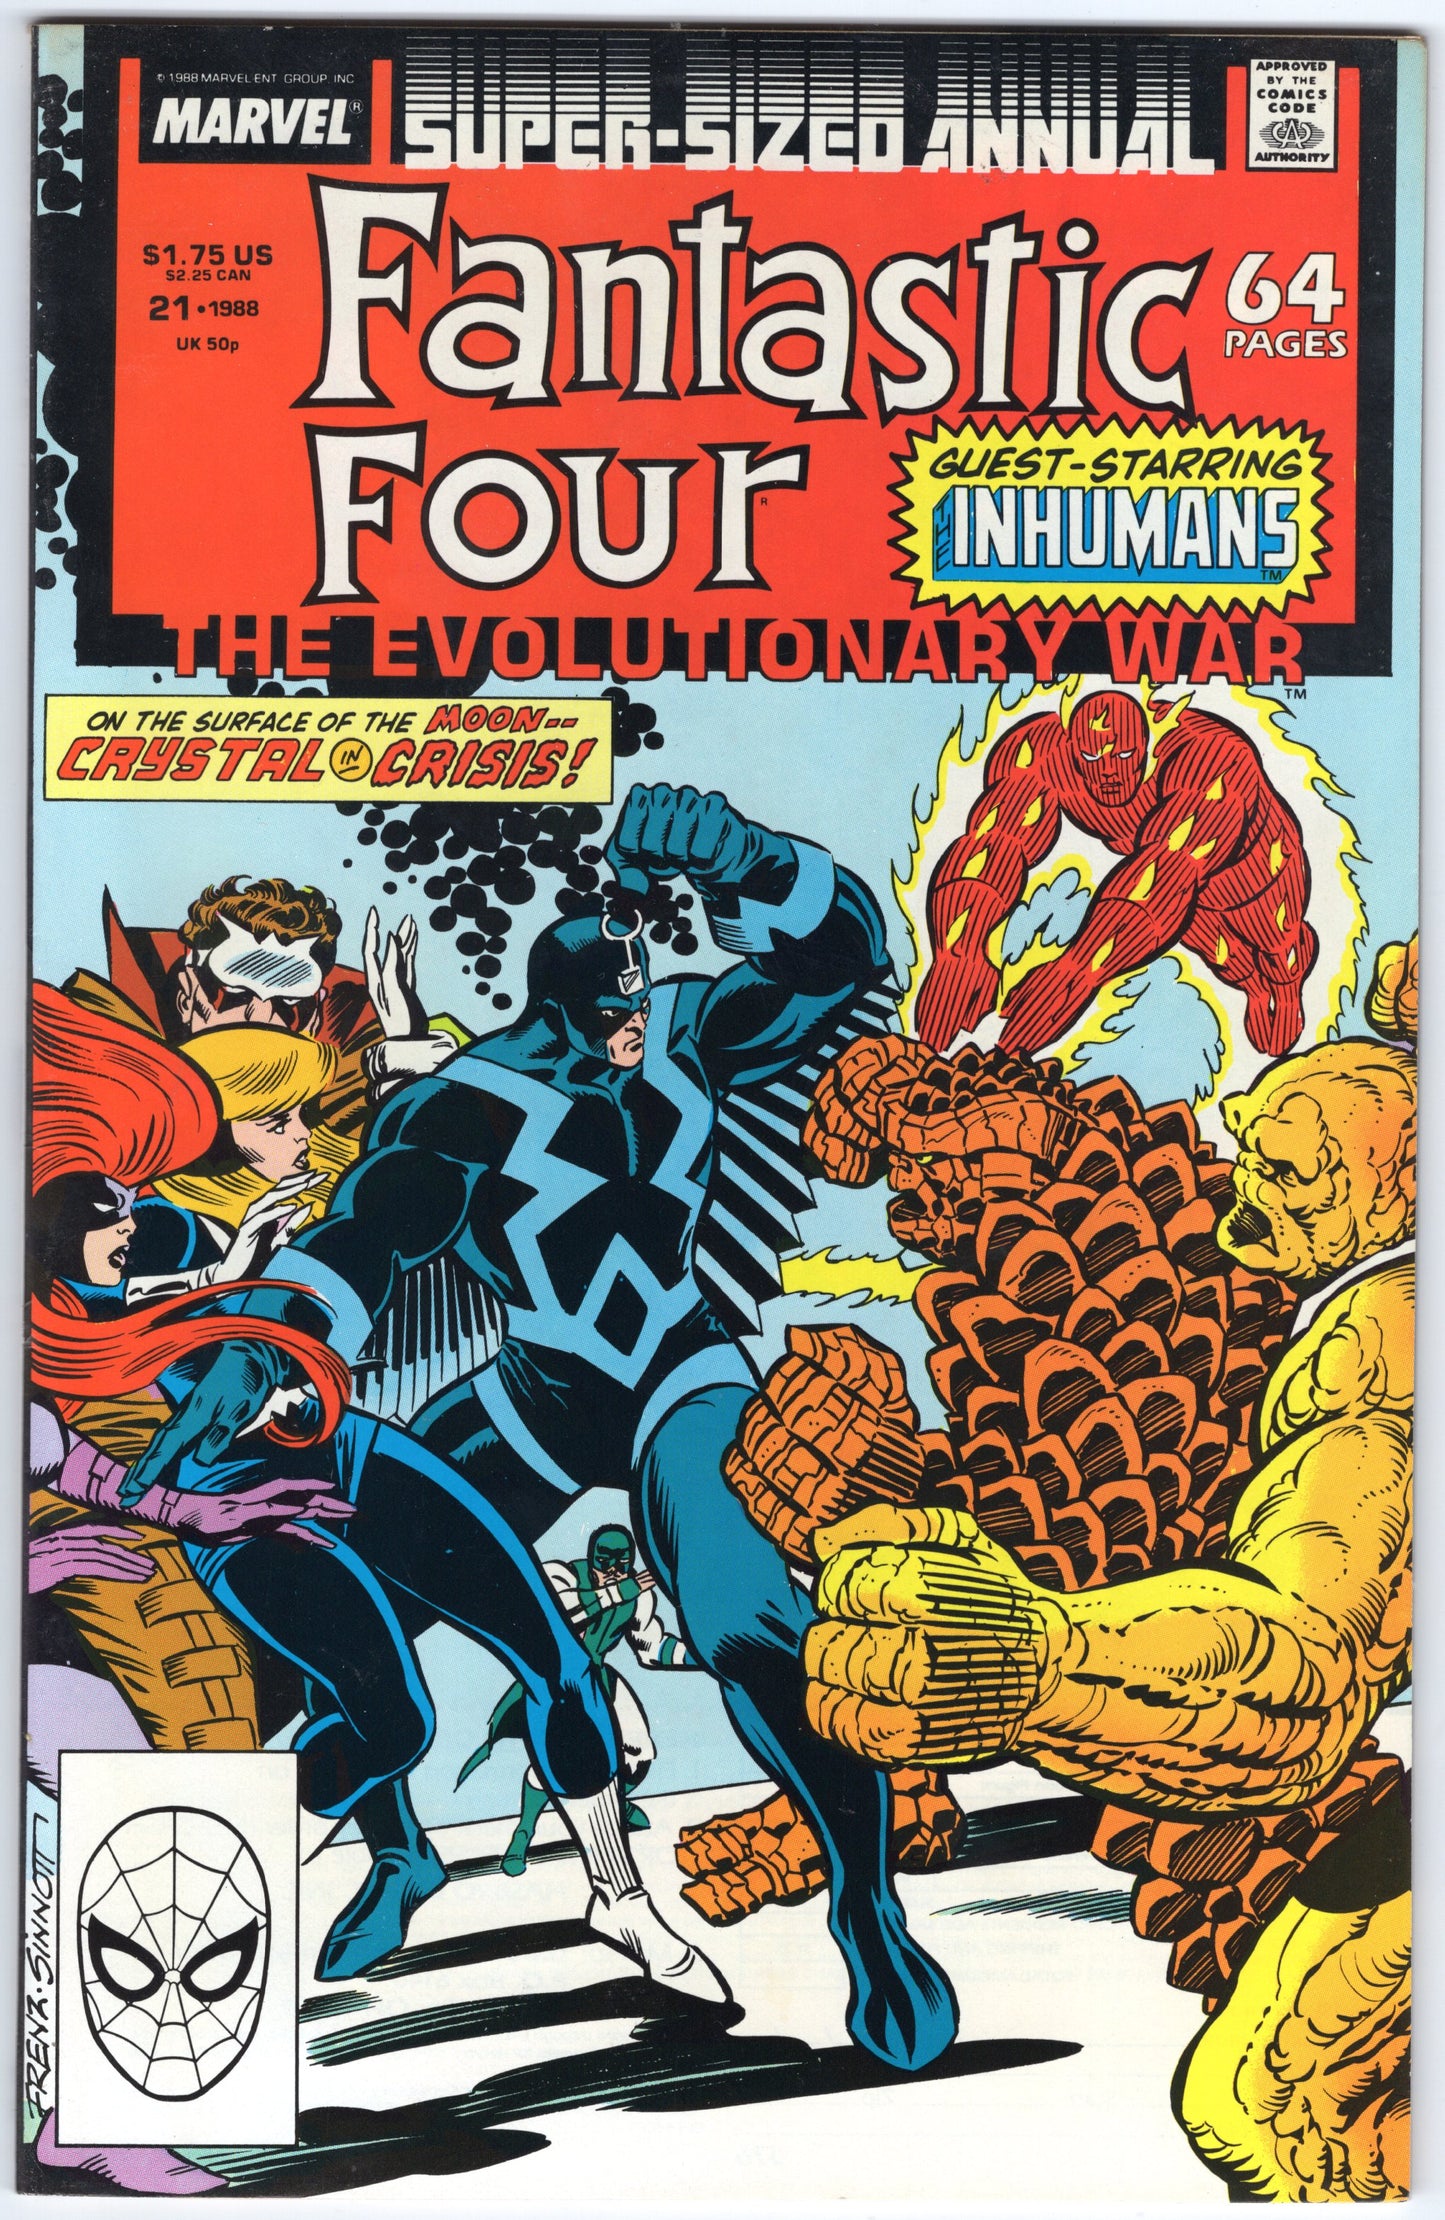 Fantastic Four - Issue #21 "Super-Sized Annual - Evolutionary War" (1988 - Marvel Comics) VF+